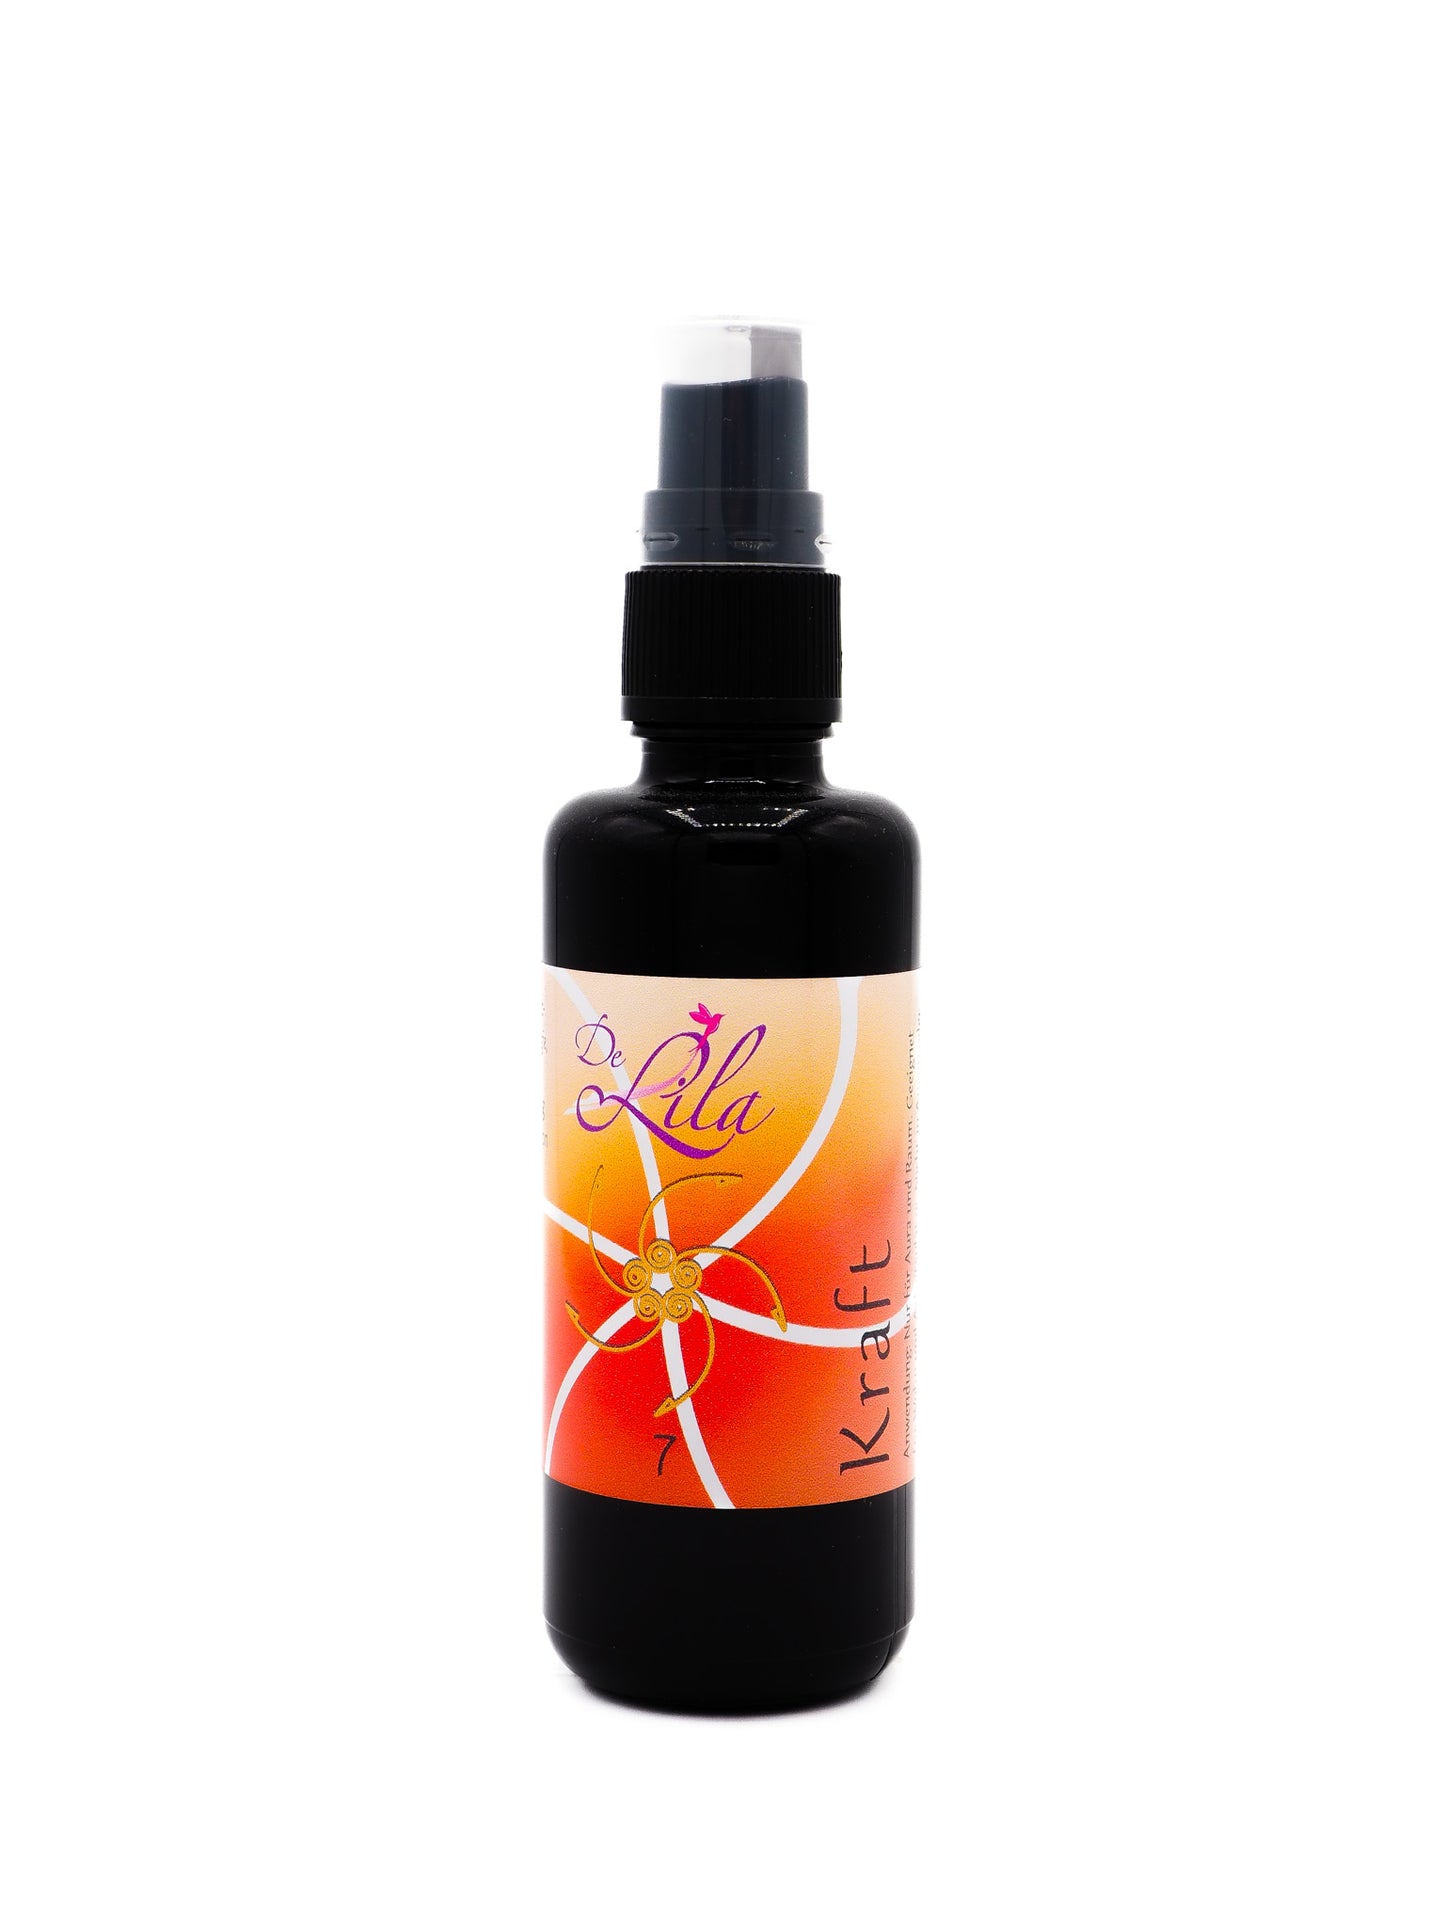 DeLila® Fragrance & Aura Spray - 7 - Power